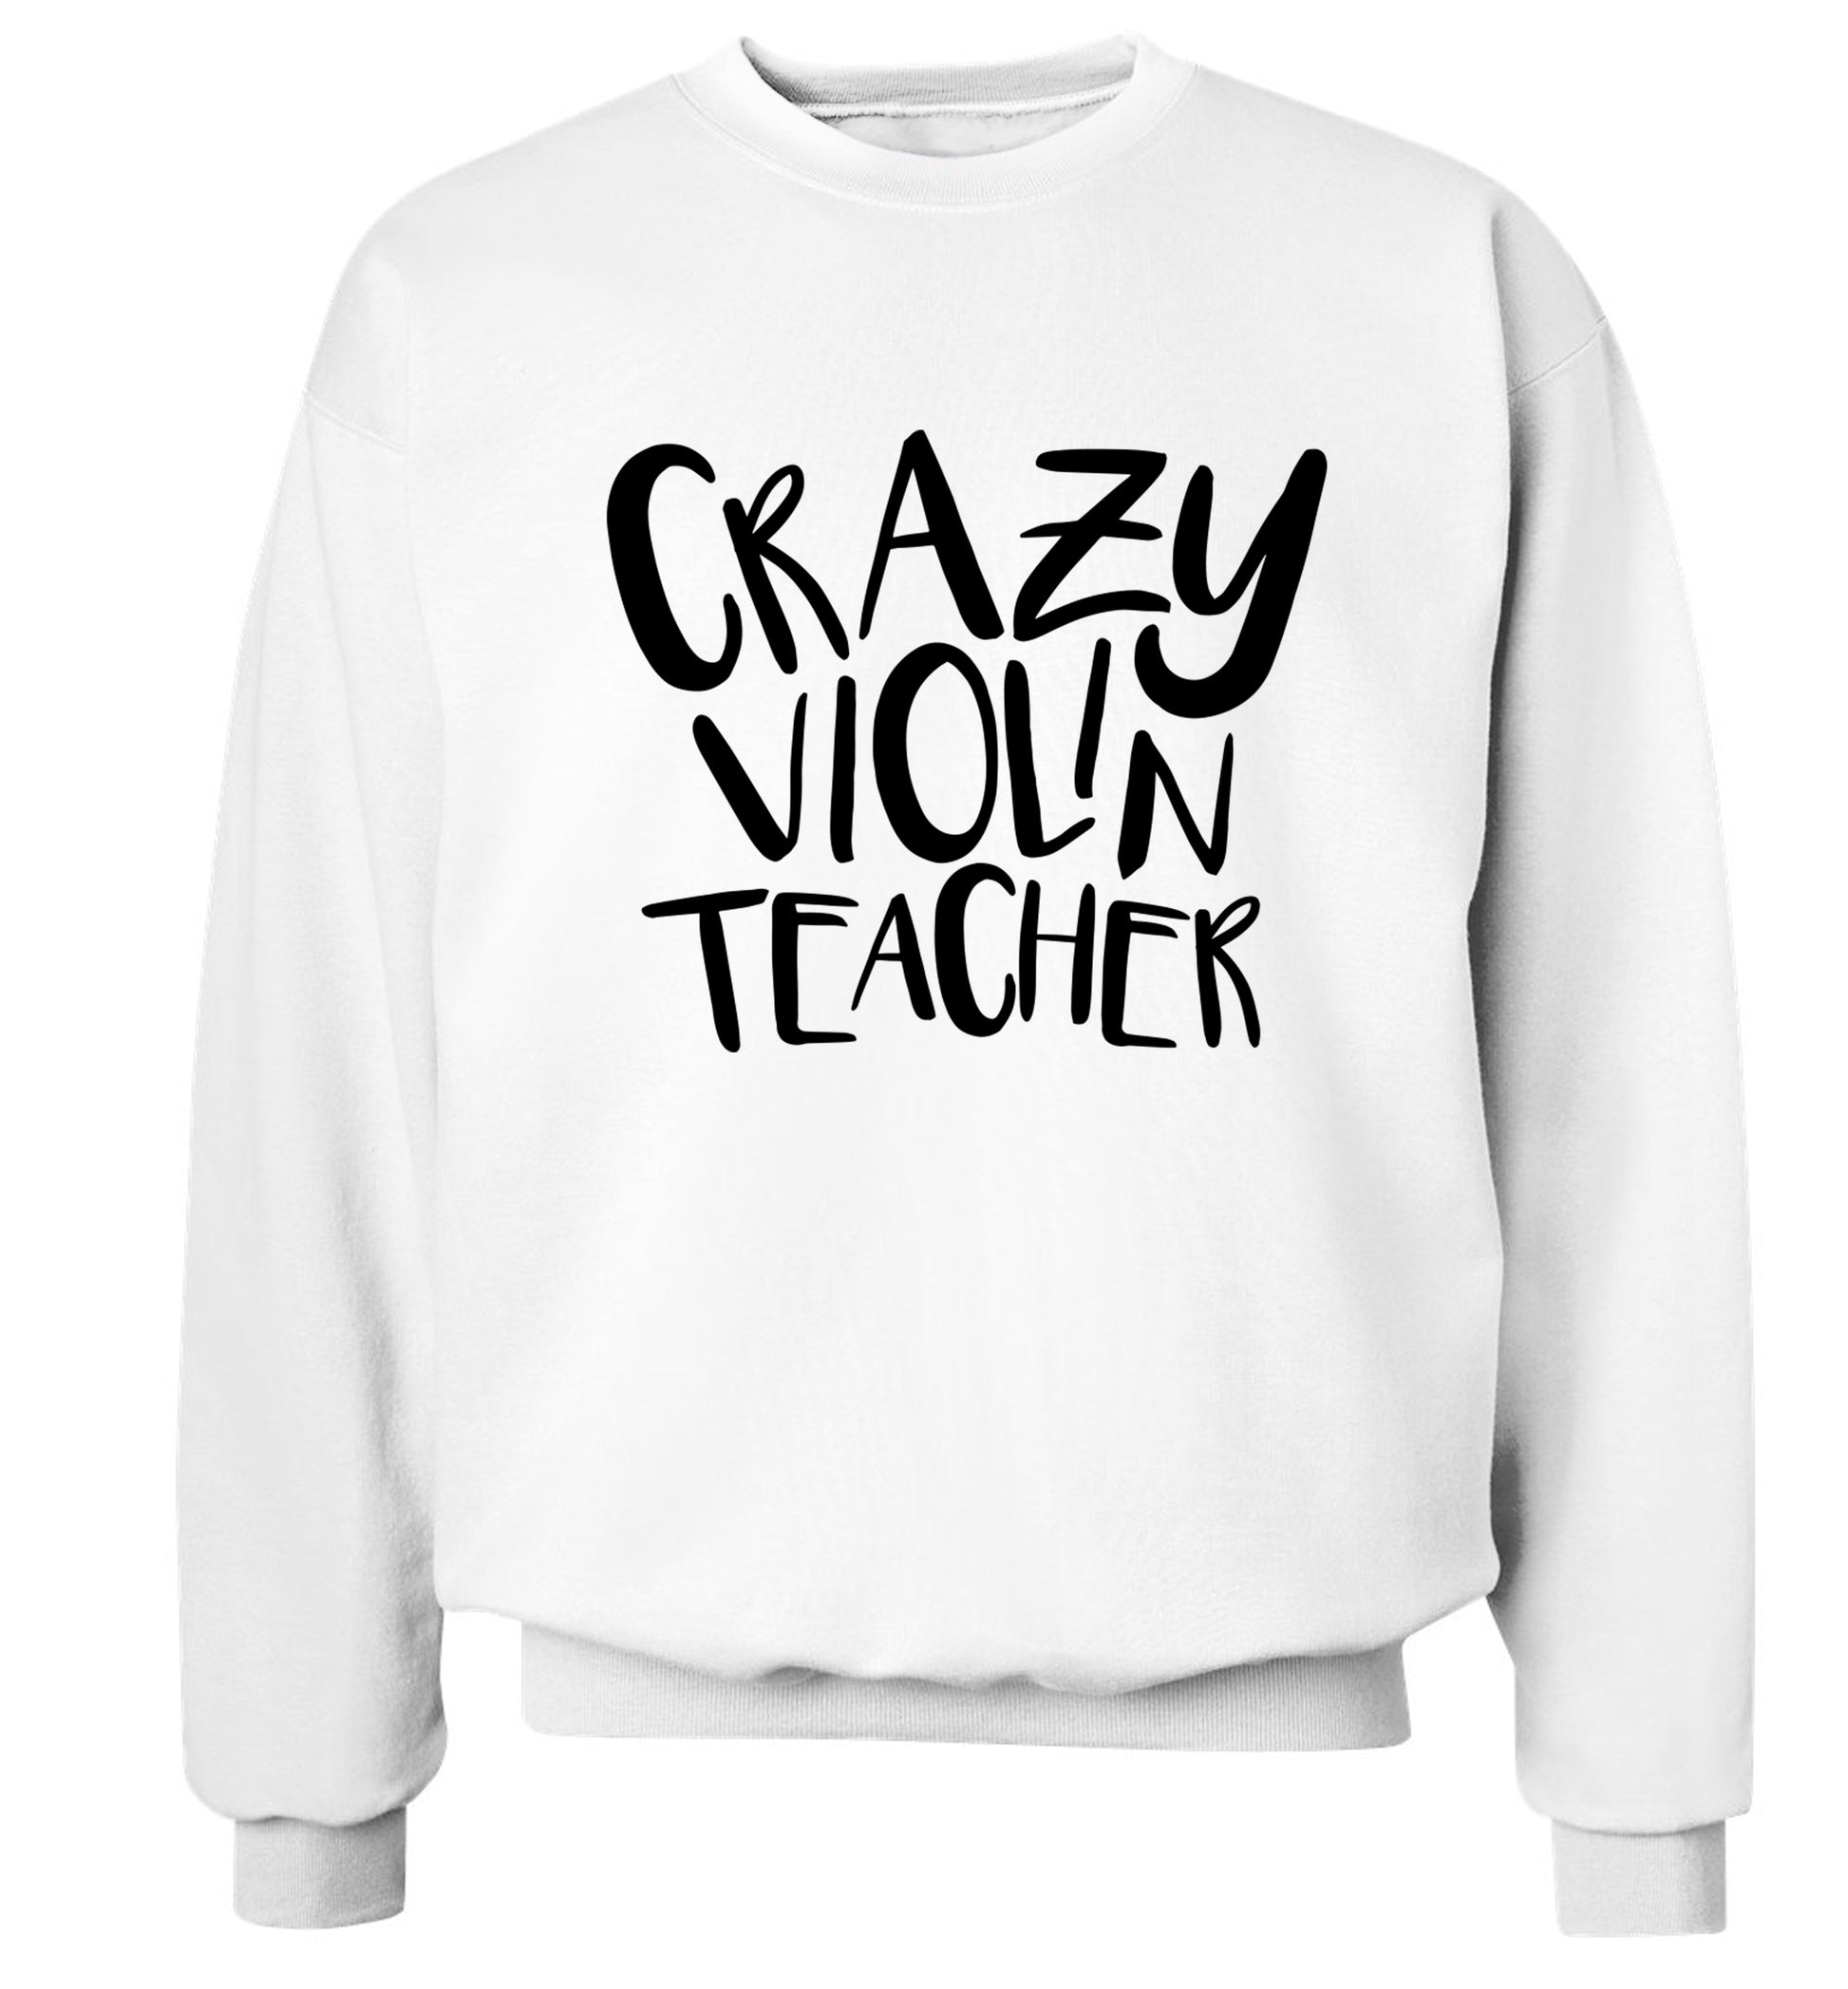 Crazy violin teacher Adult's unisex white Sweater 2XL